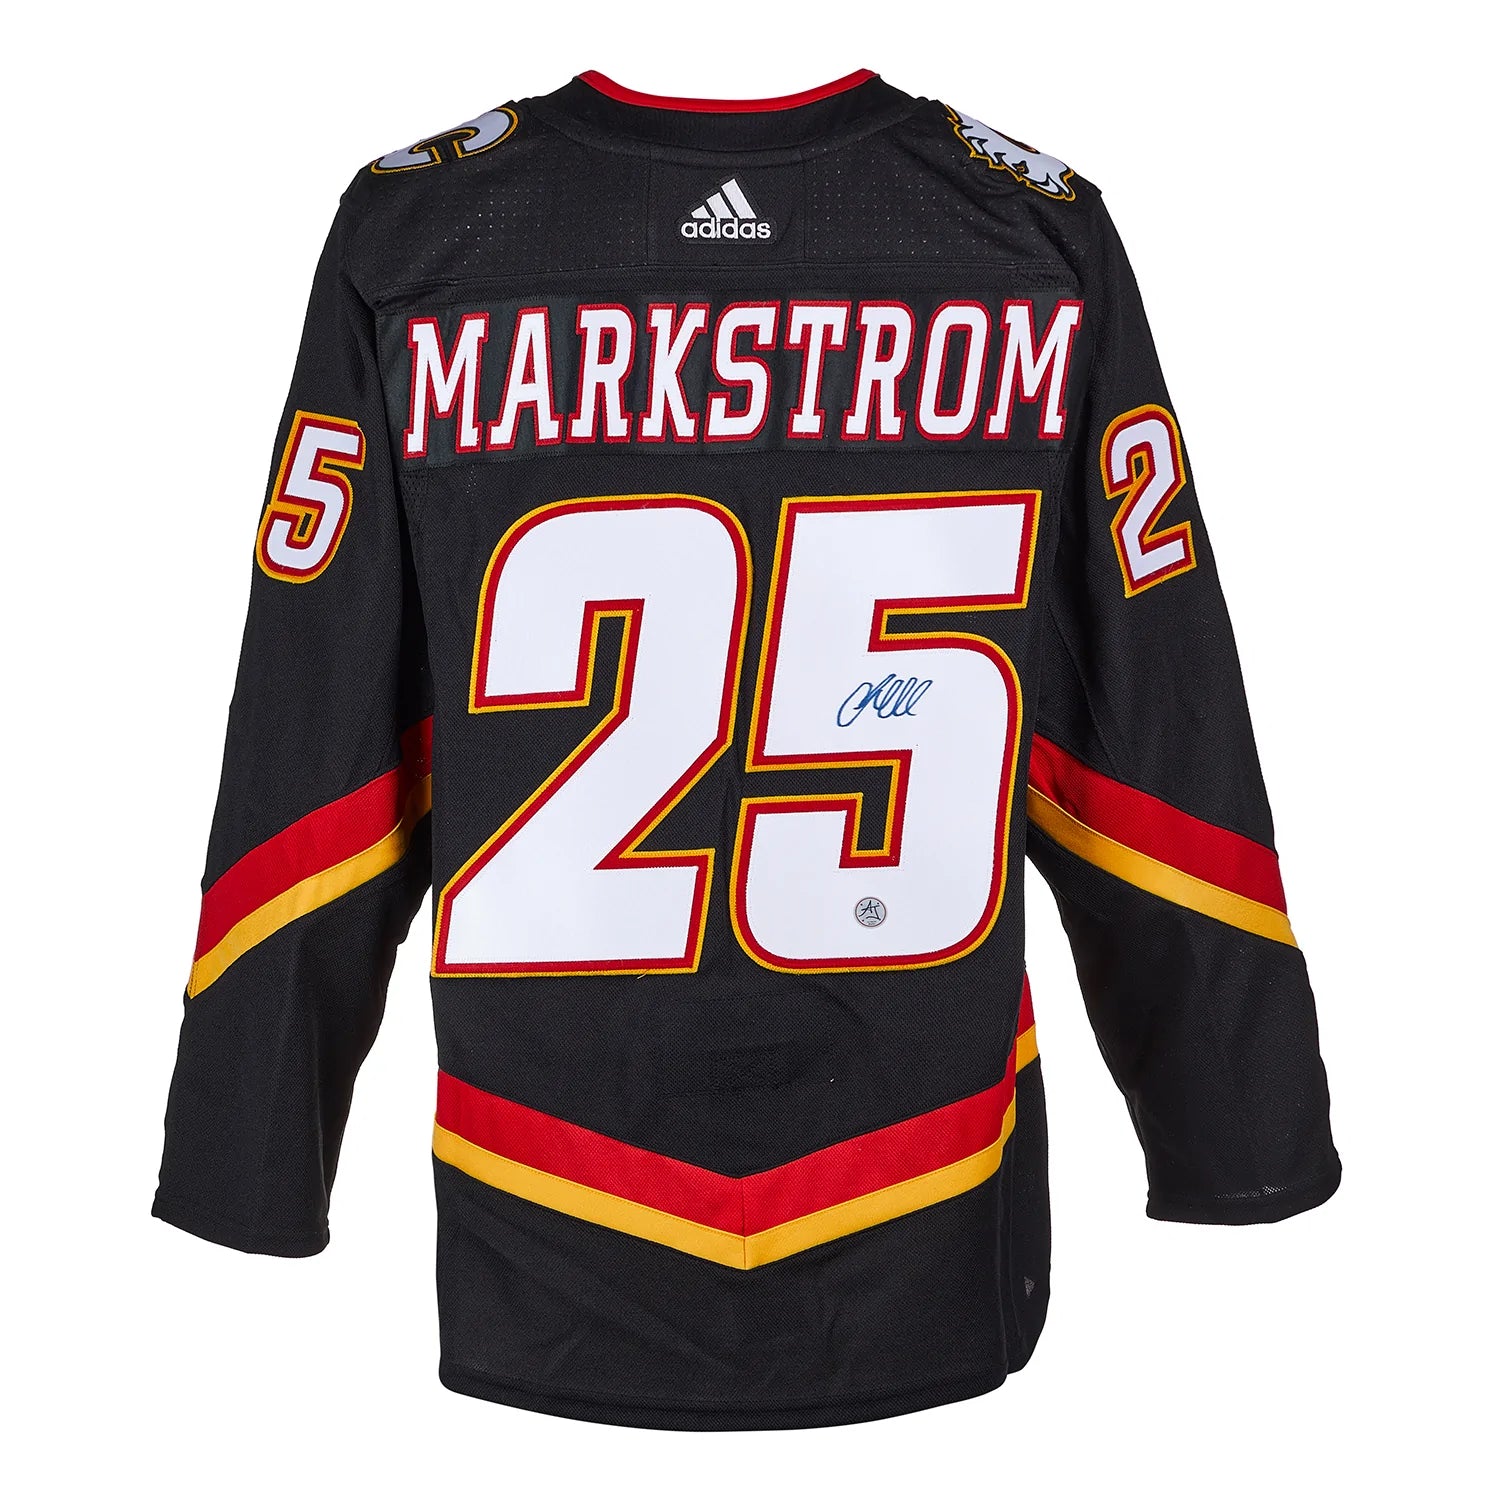 Markstrom's Blasty Gear! : r/CalgaryFlames